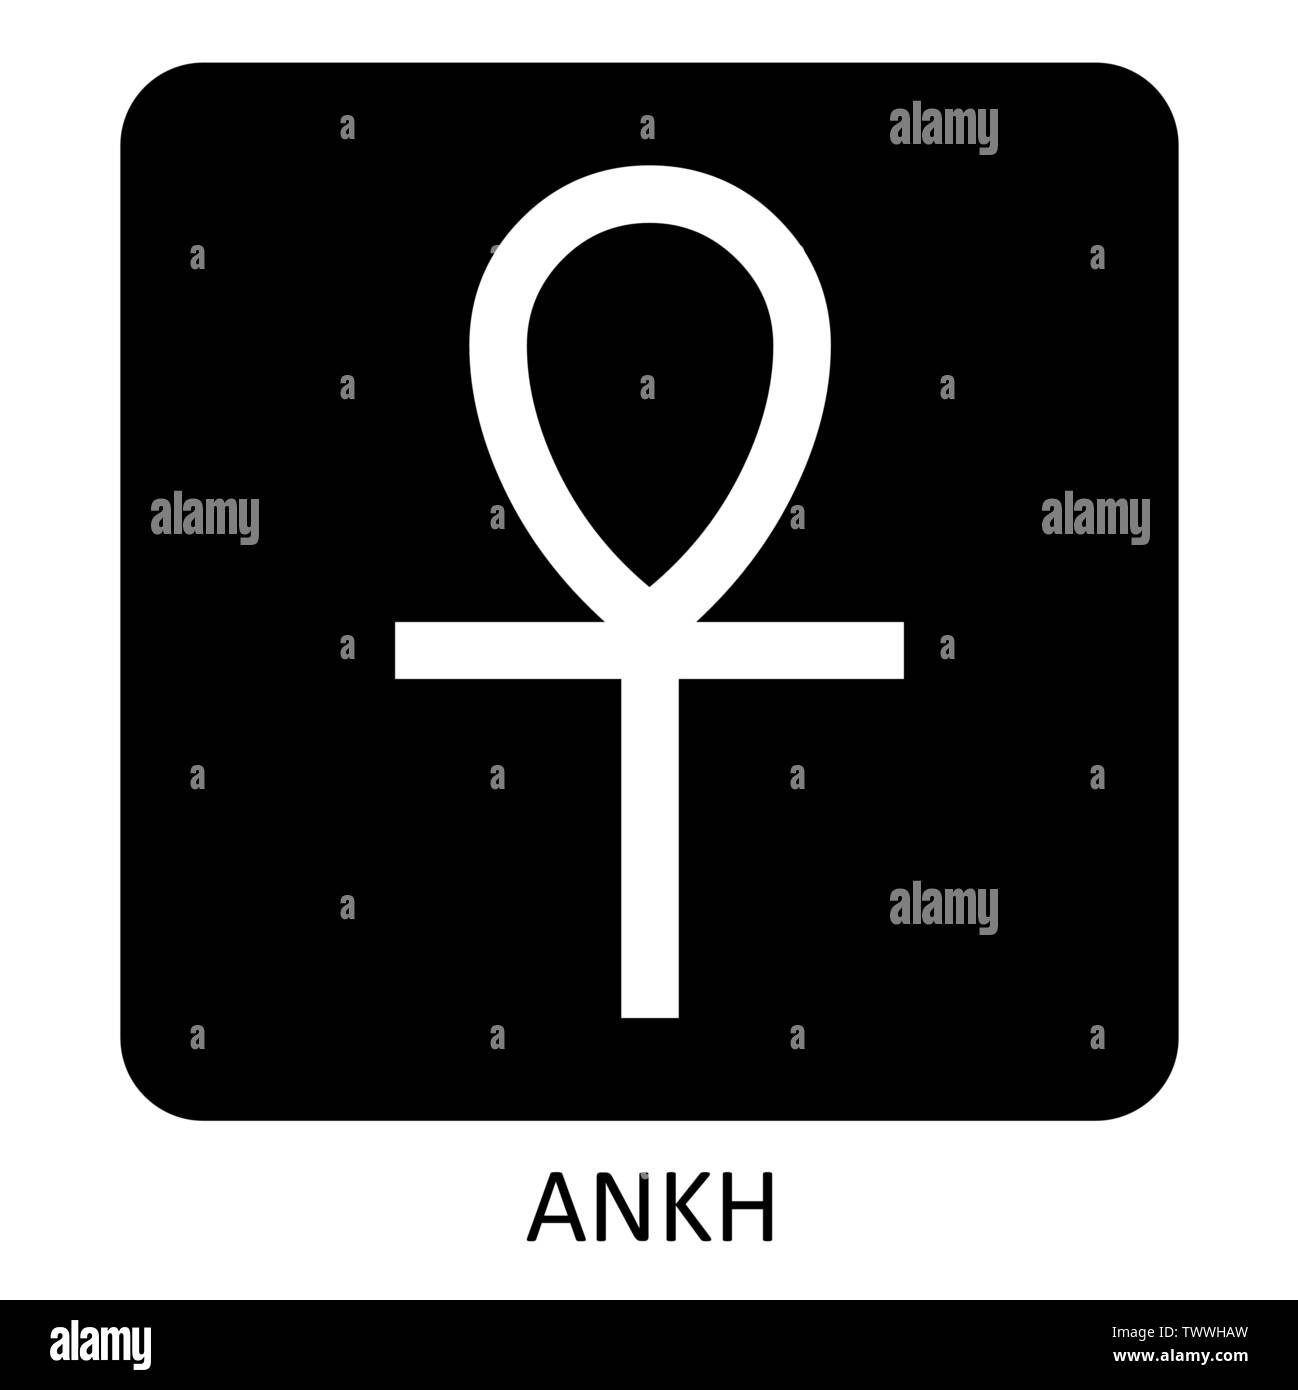 Ankh symbol illustration on the dark background Stock Vector